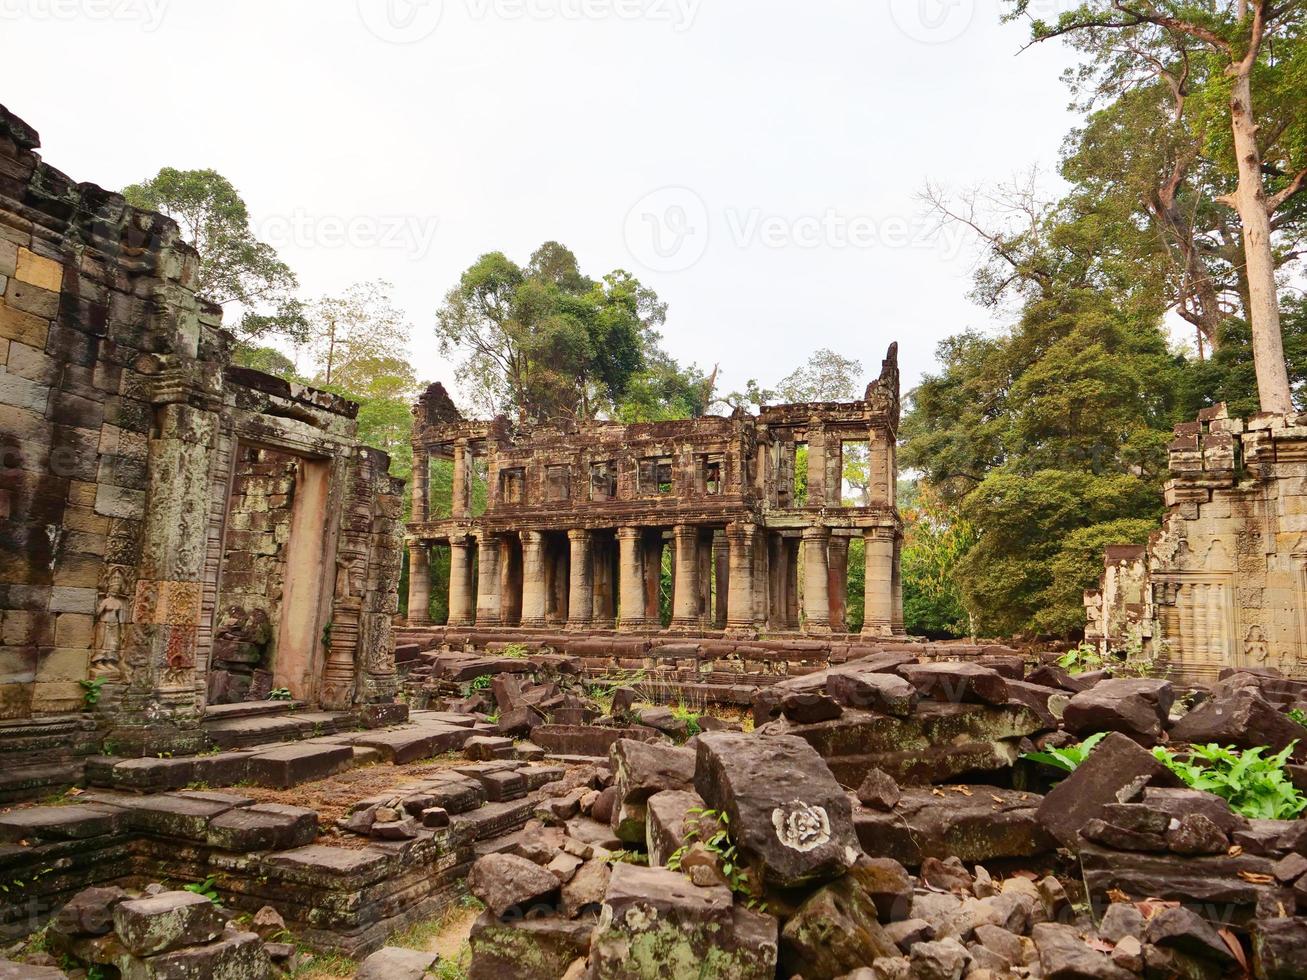 Complexo de Angkor Wat do Templo de Preah Khan, Camboja Siem Reap foto